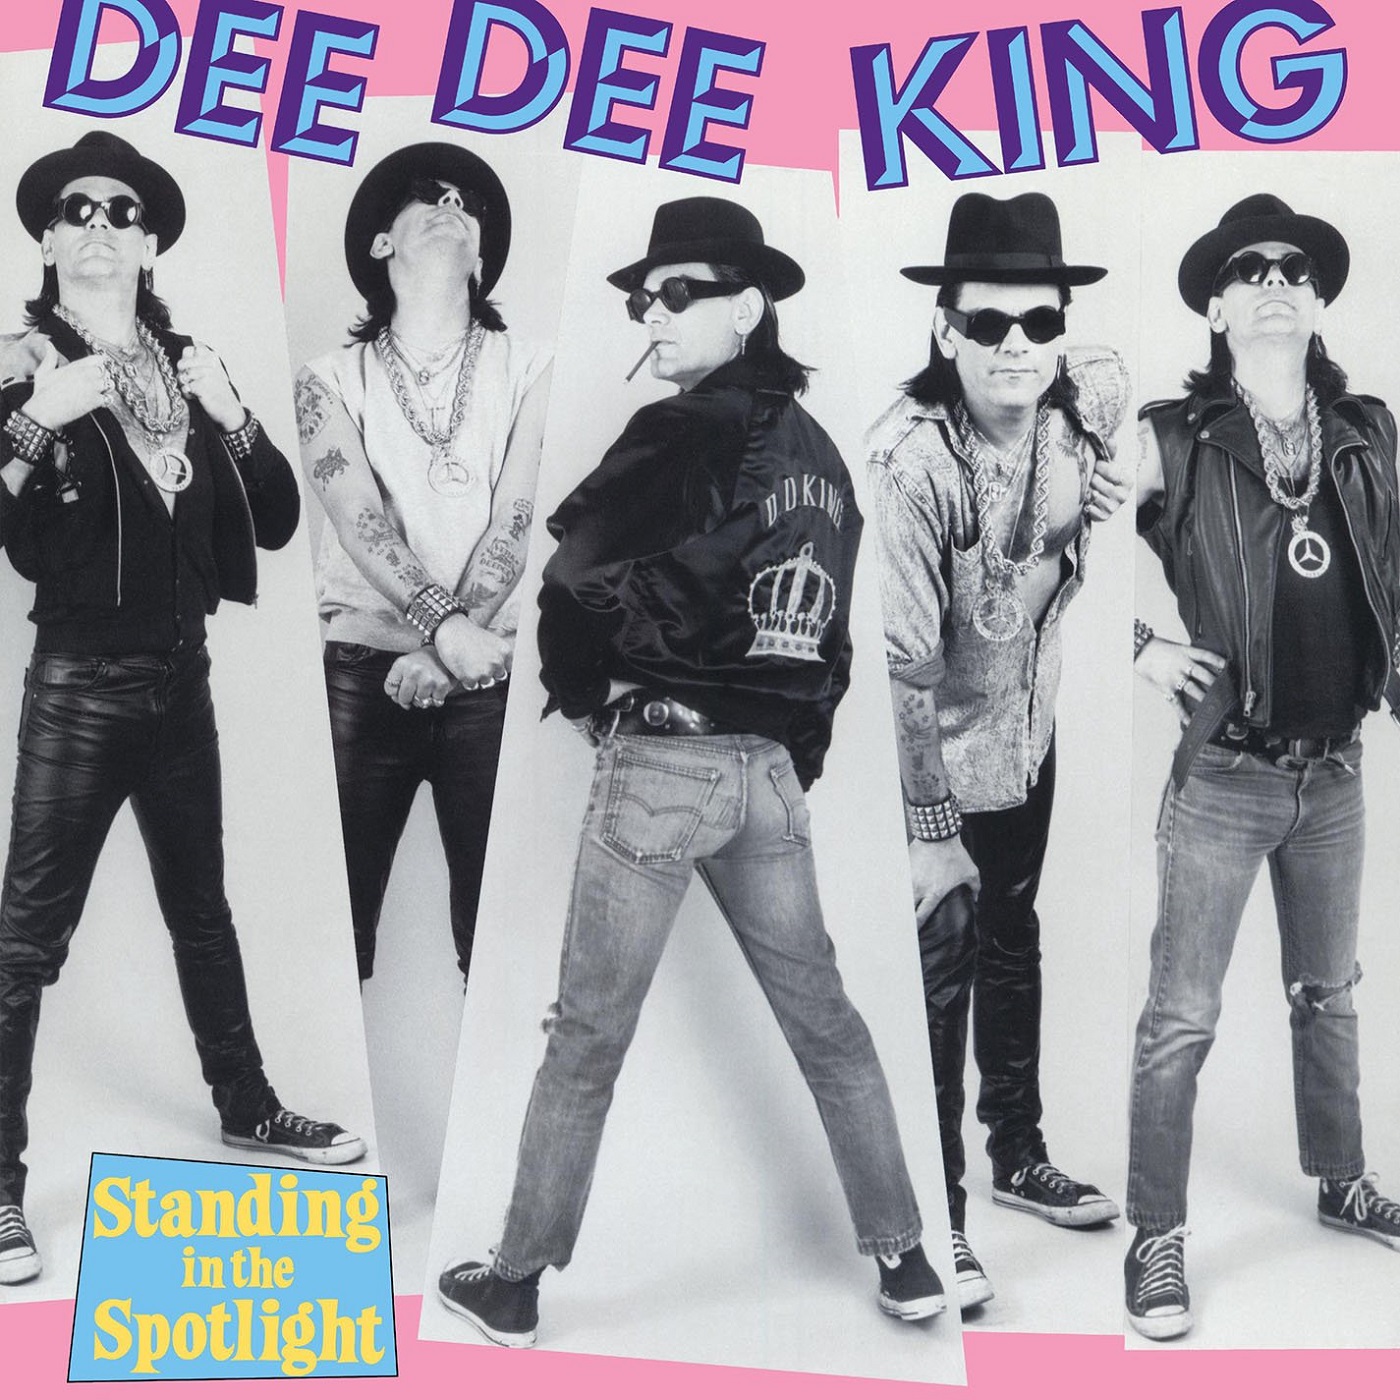 Dee Dee King’s “Standing In The Spotlight”